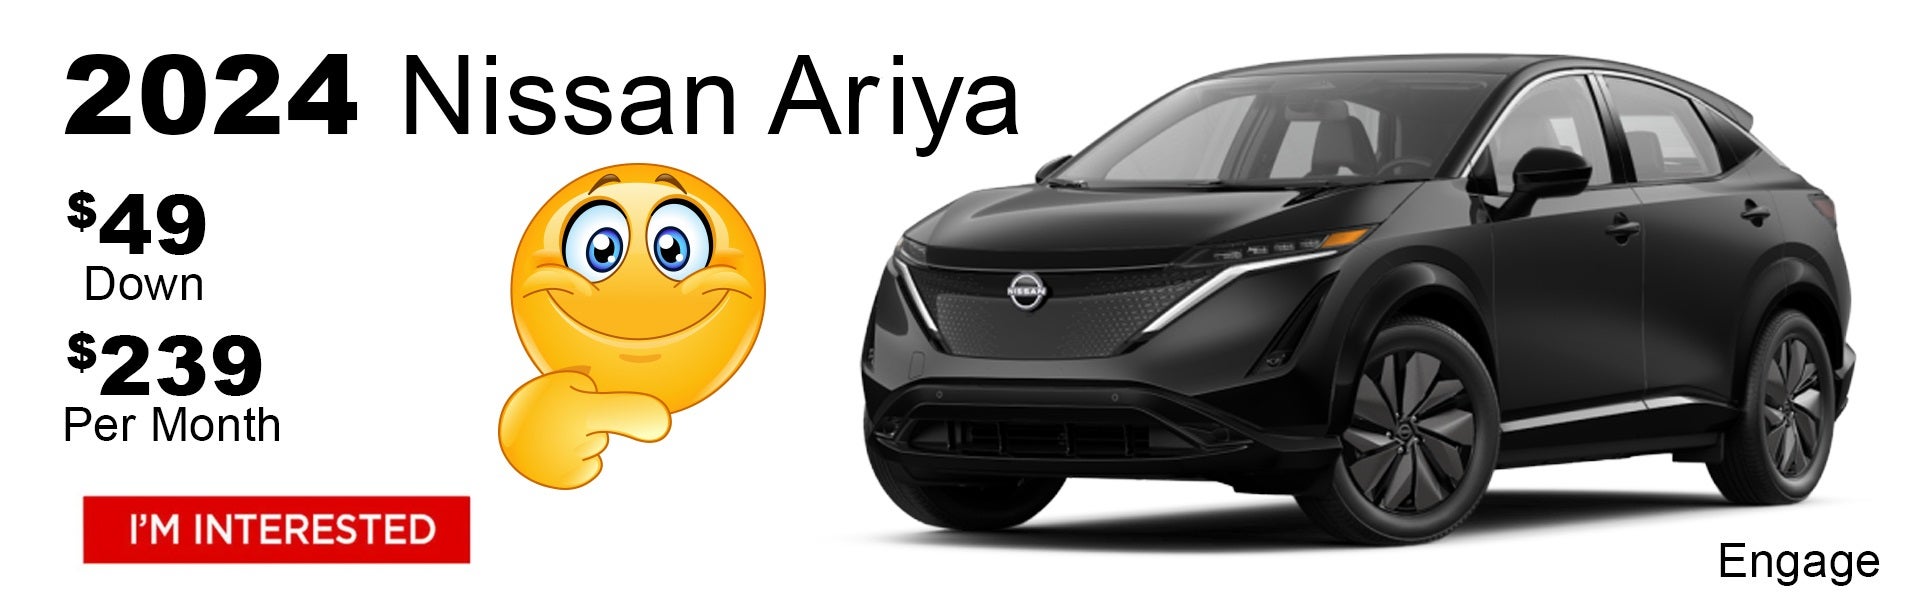 New Nissan Ariya $49 Dealer Special